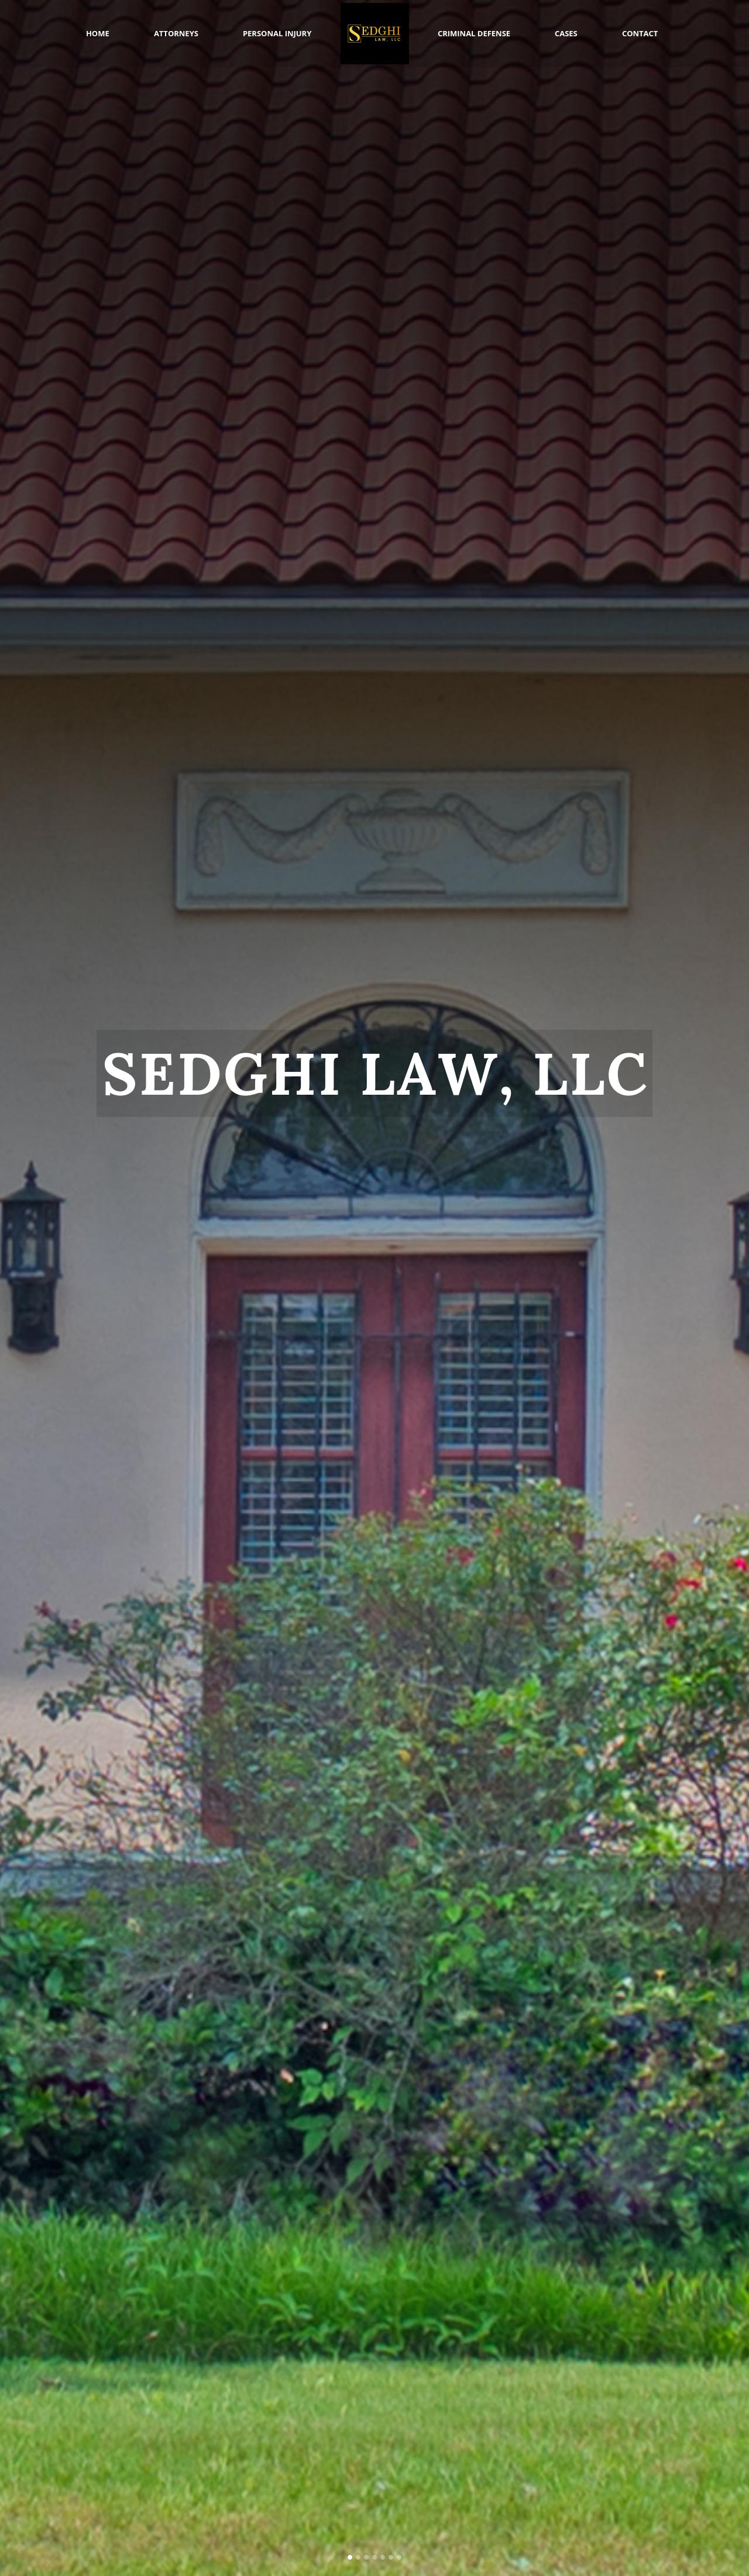 Sedghi, Reza - Macon GA Lawyers